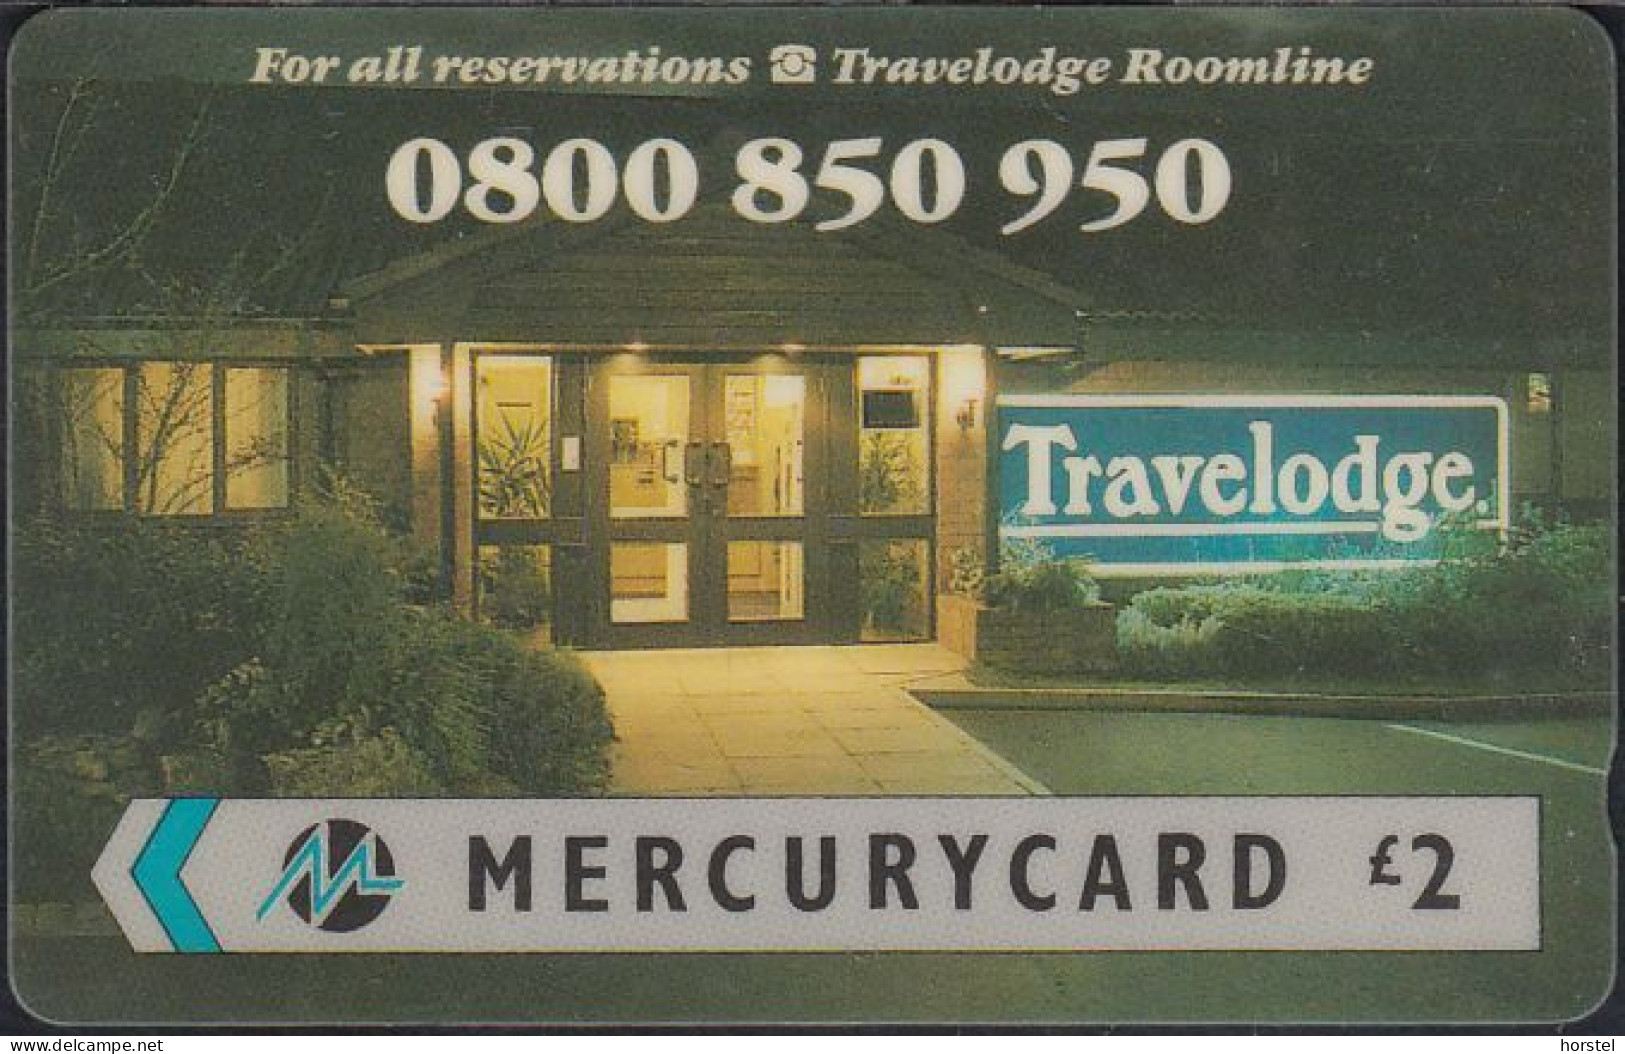 Paytelco Cards - PYTH002 Travelodge 0800 850 950 - £2 - 6PTHA - Mercury Communications & Paytelco